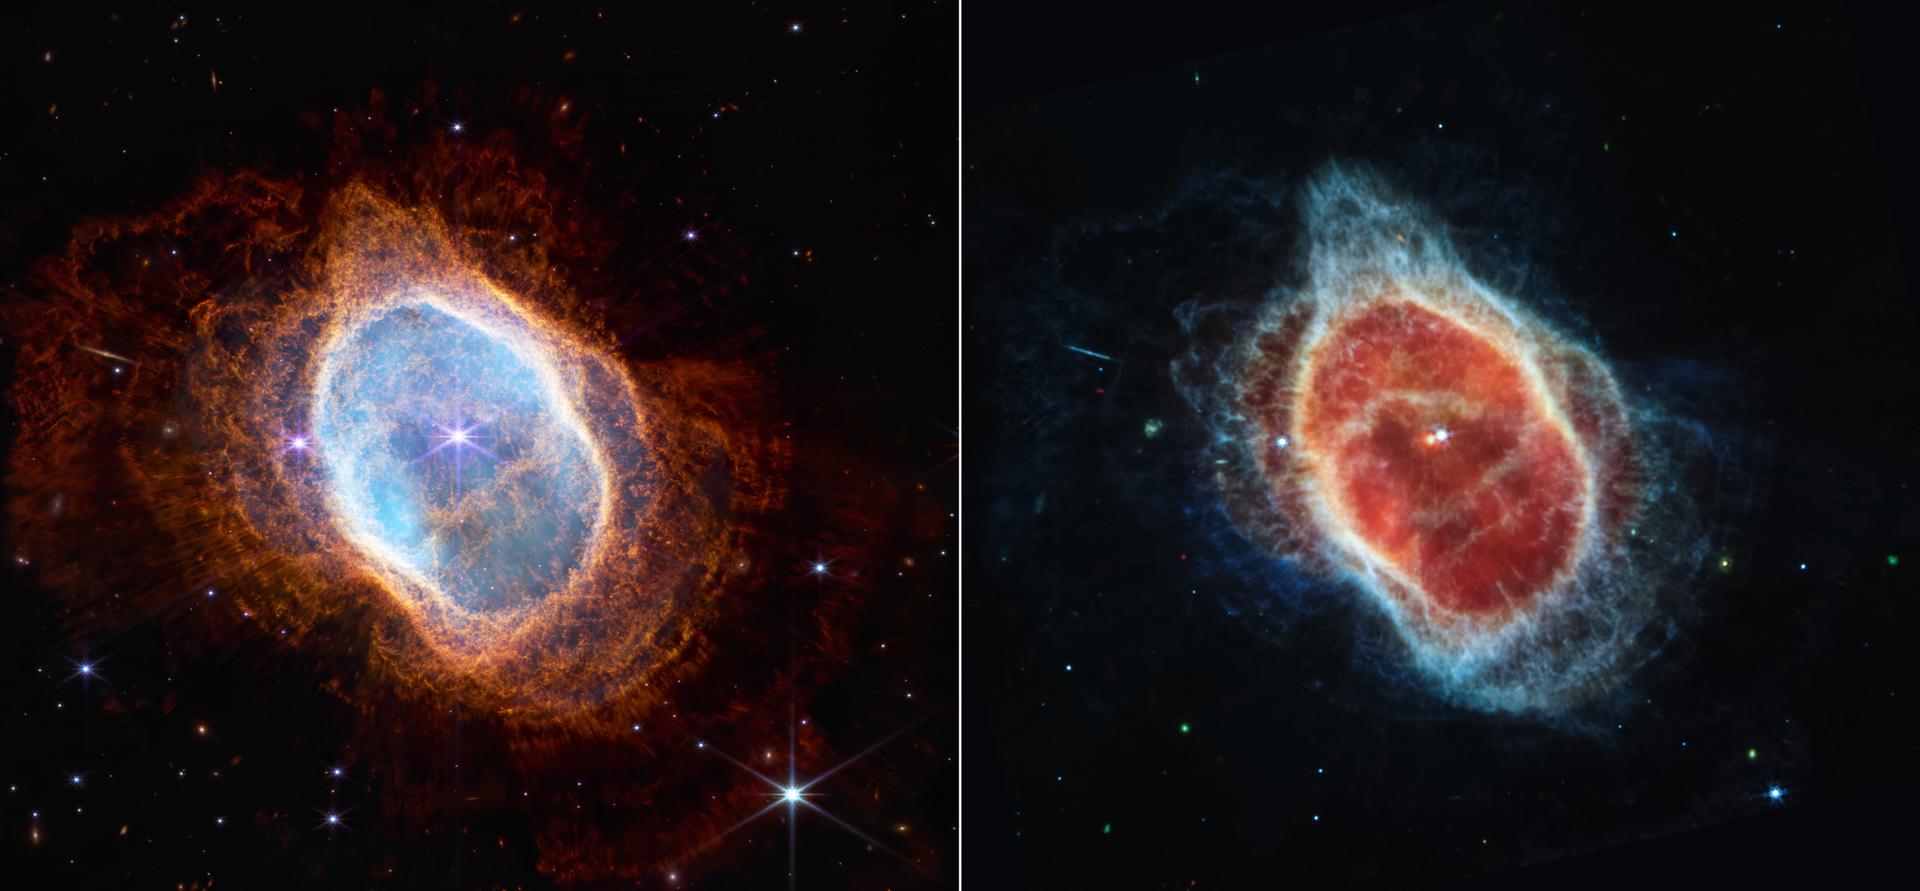 Two images of nebula